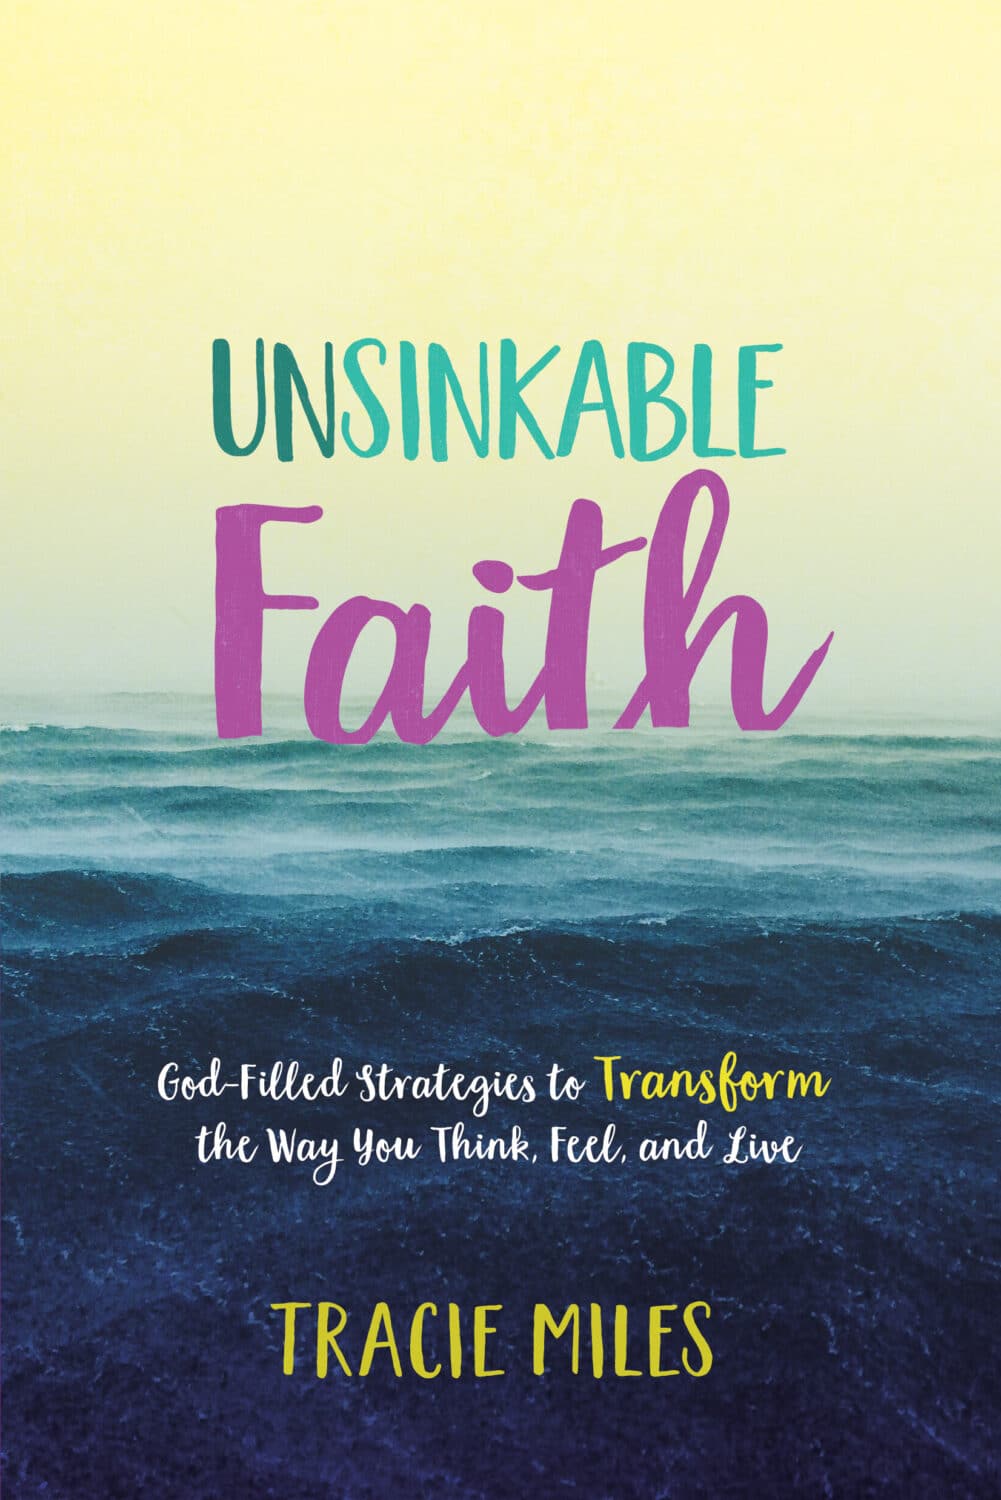 unsinkable faith book cover image